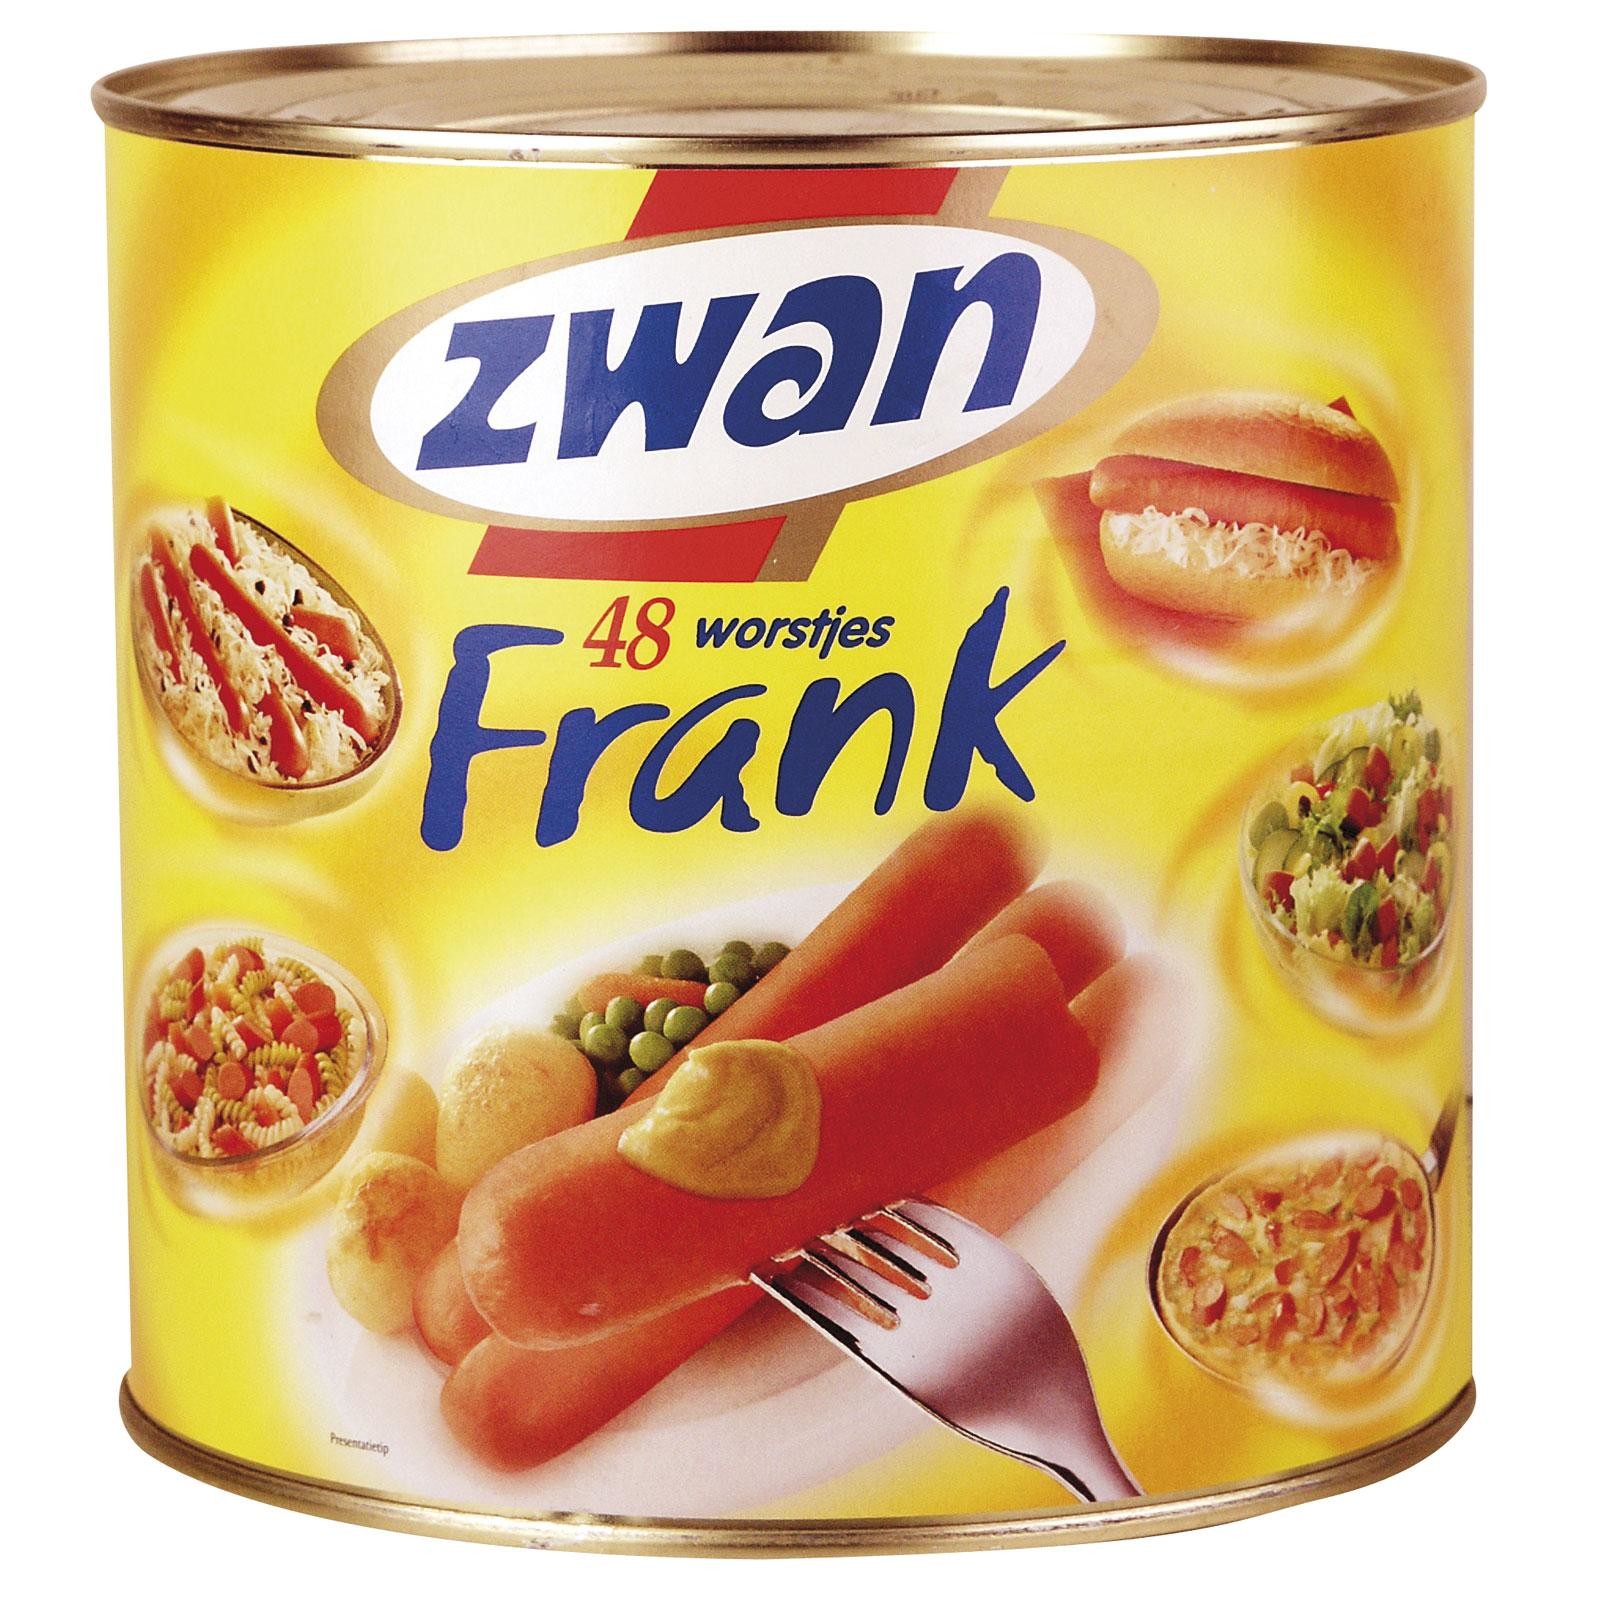 Zwan Frank worsten 48st 3L blik